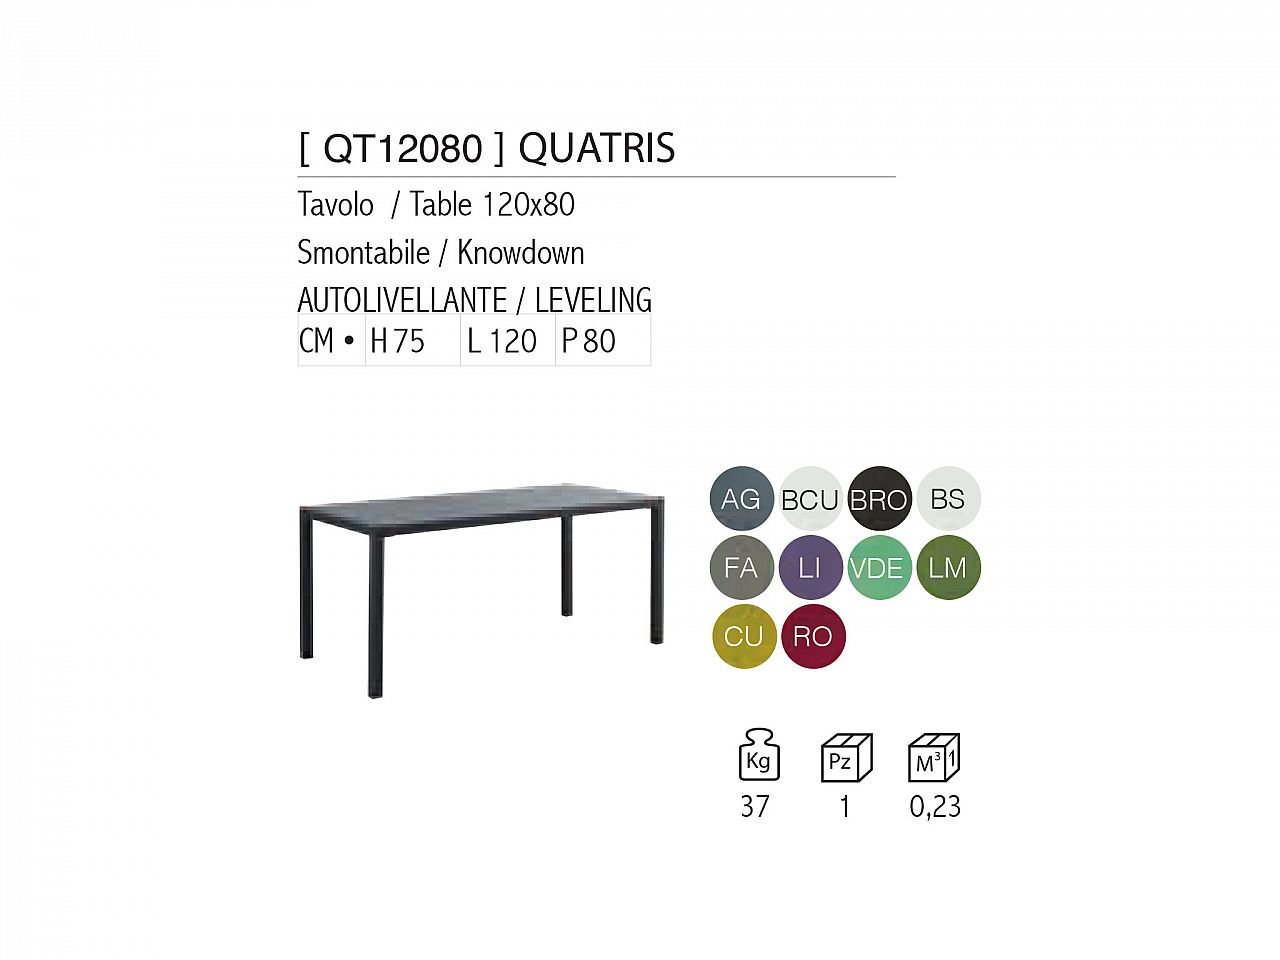 Tavolo Quatris 120x80 - 1